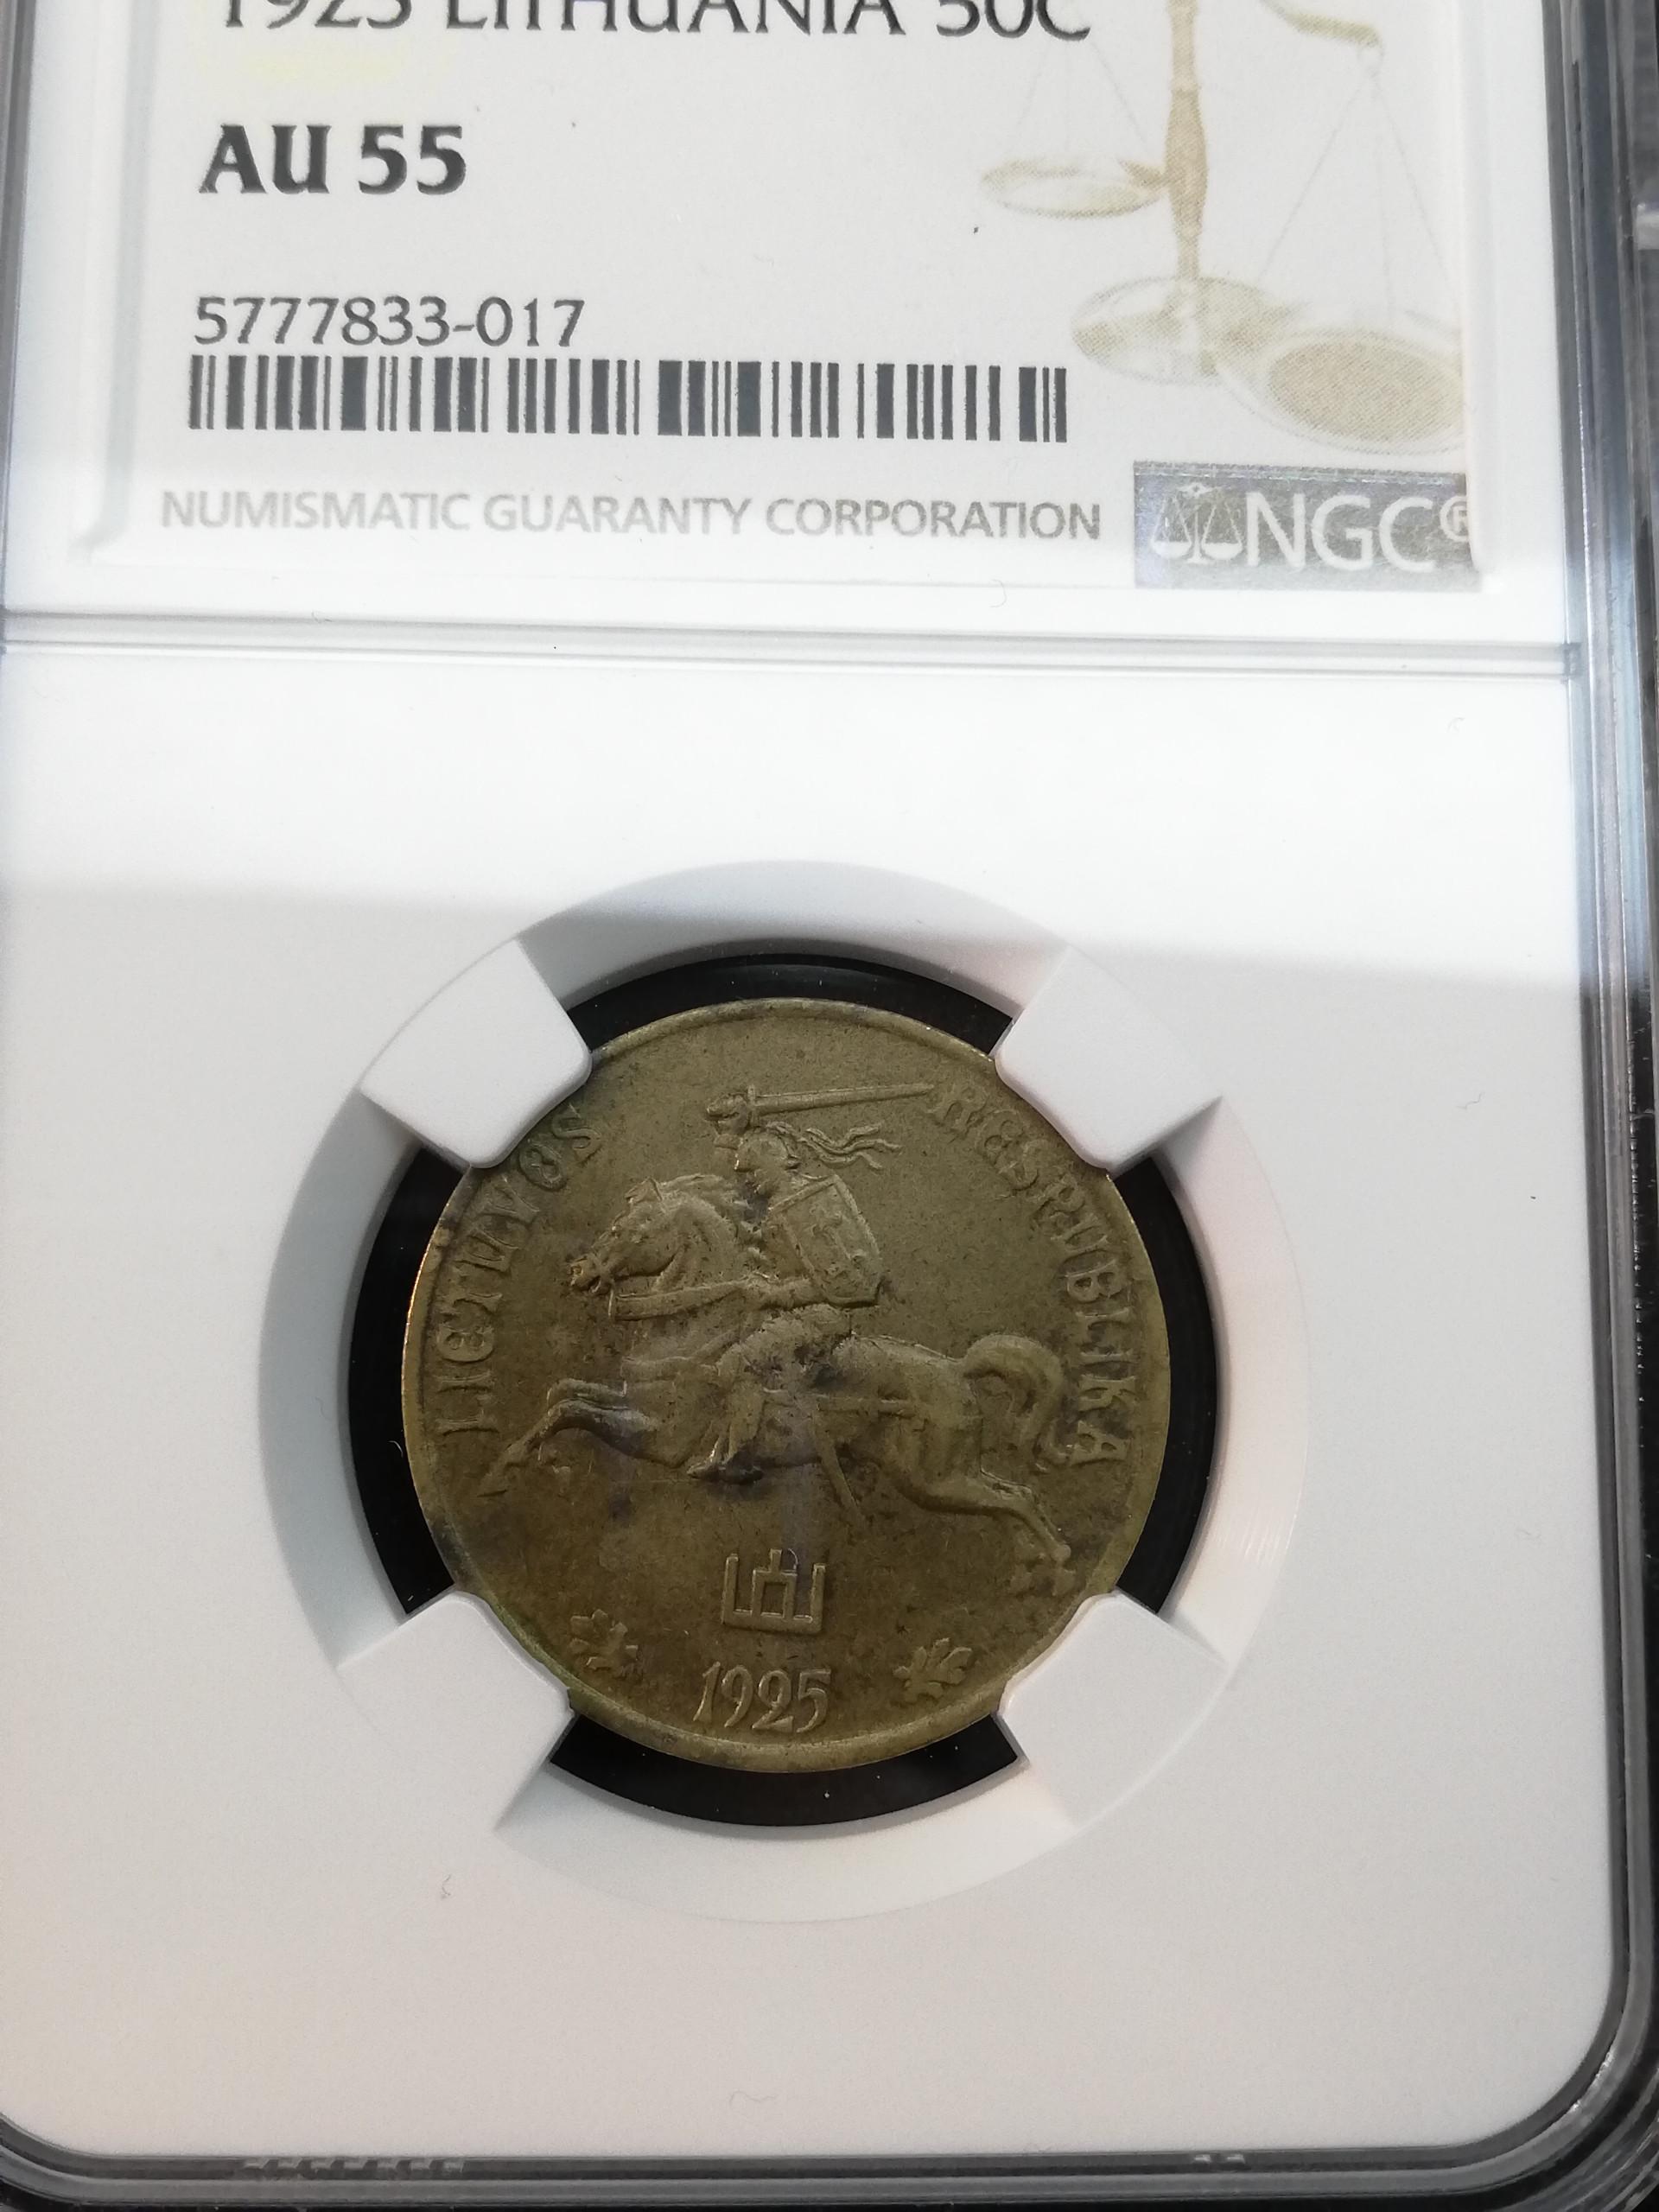 1925 50 centų AU 55